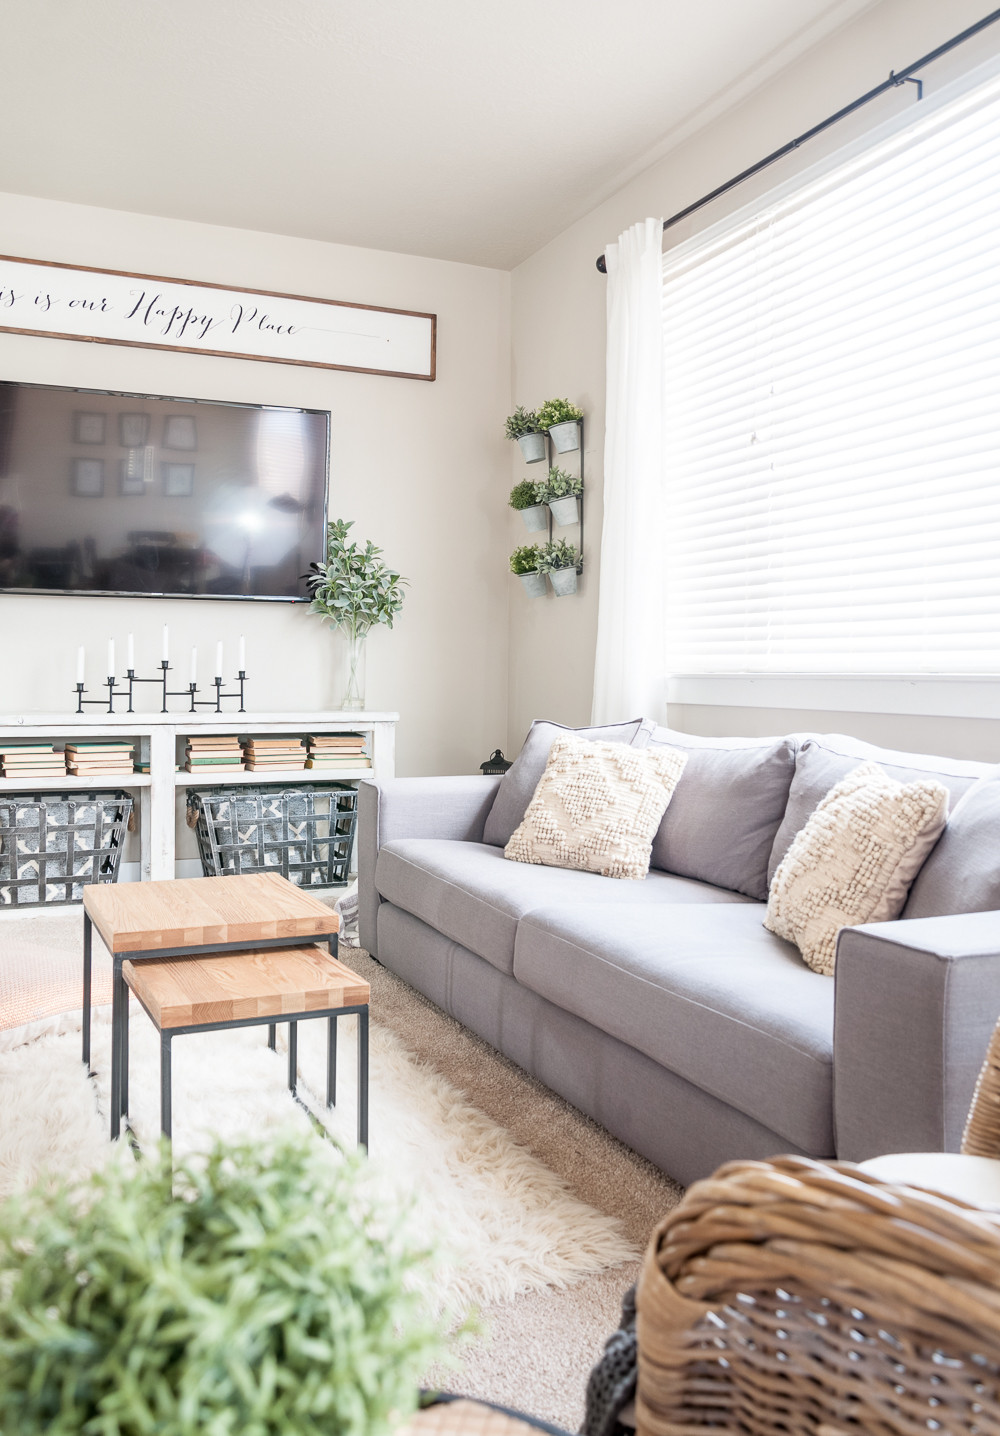 Minimalist Decor Living Room
 Living Room Layout And Decor Minimalist Rustic Cozy